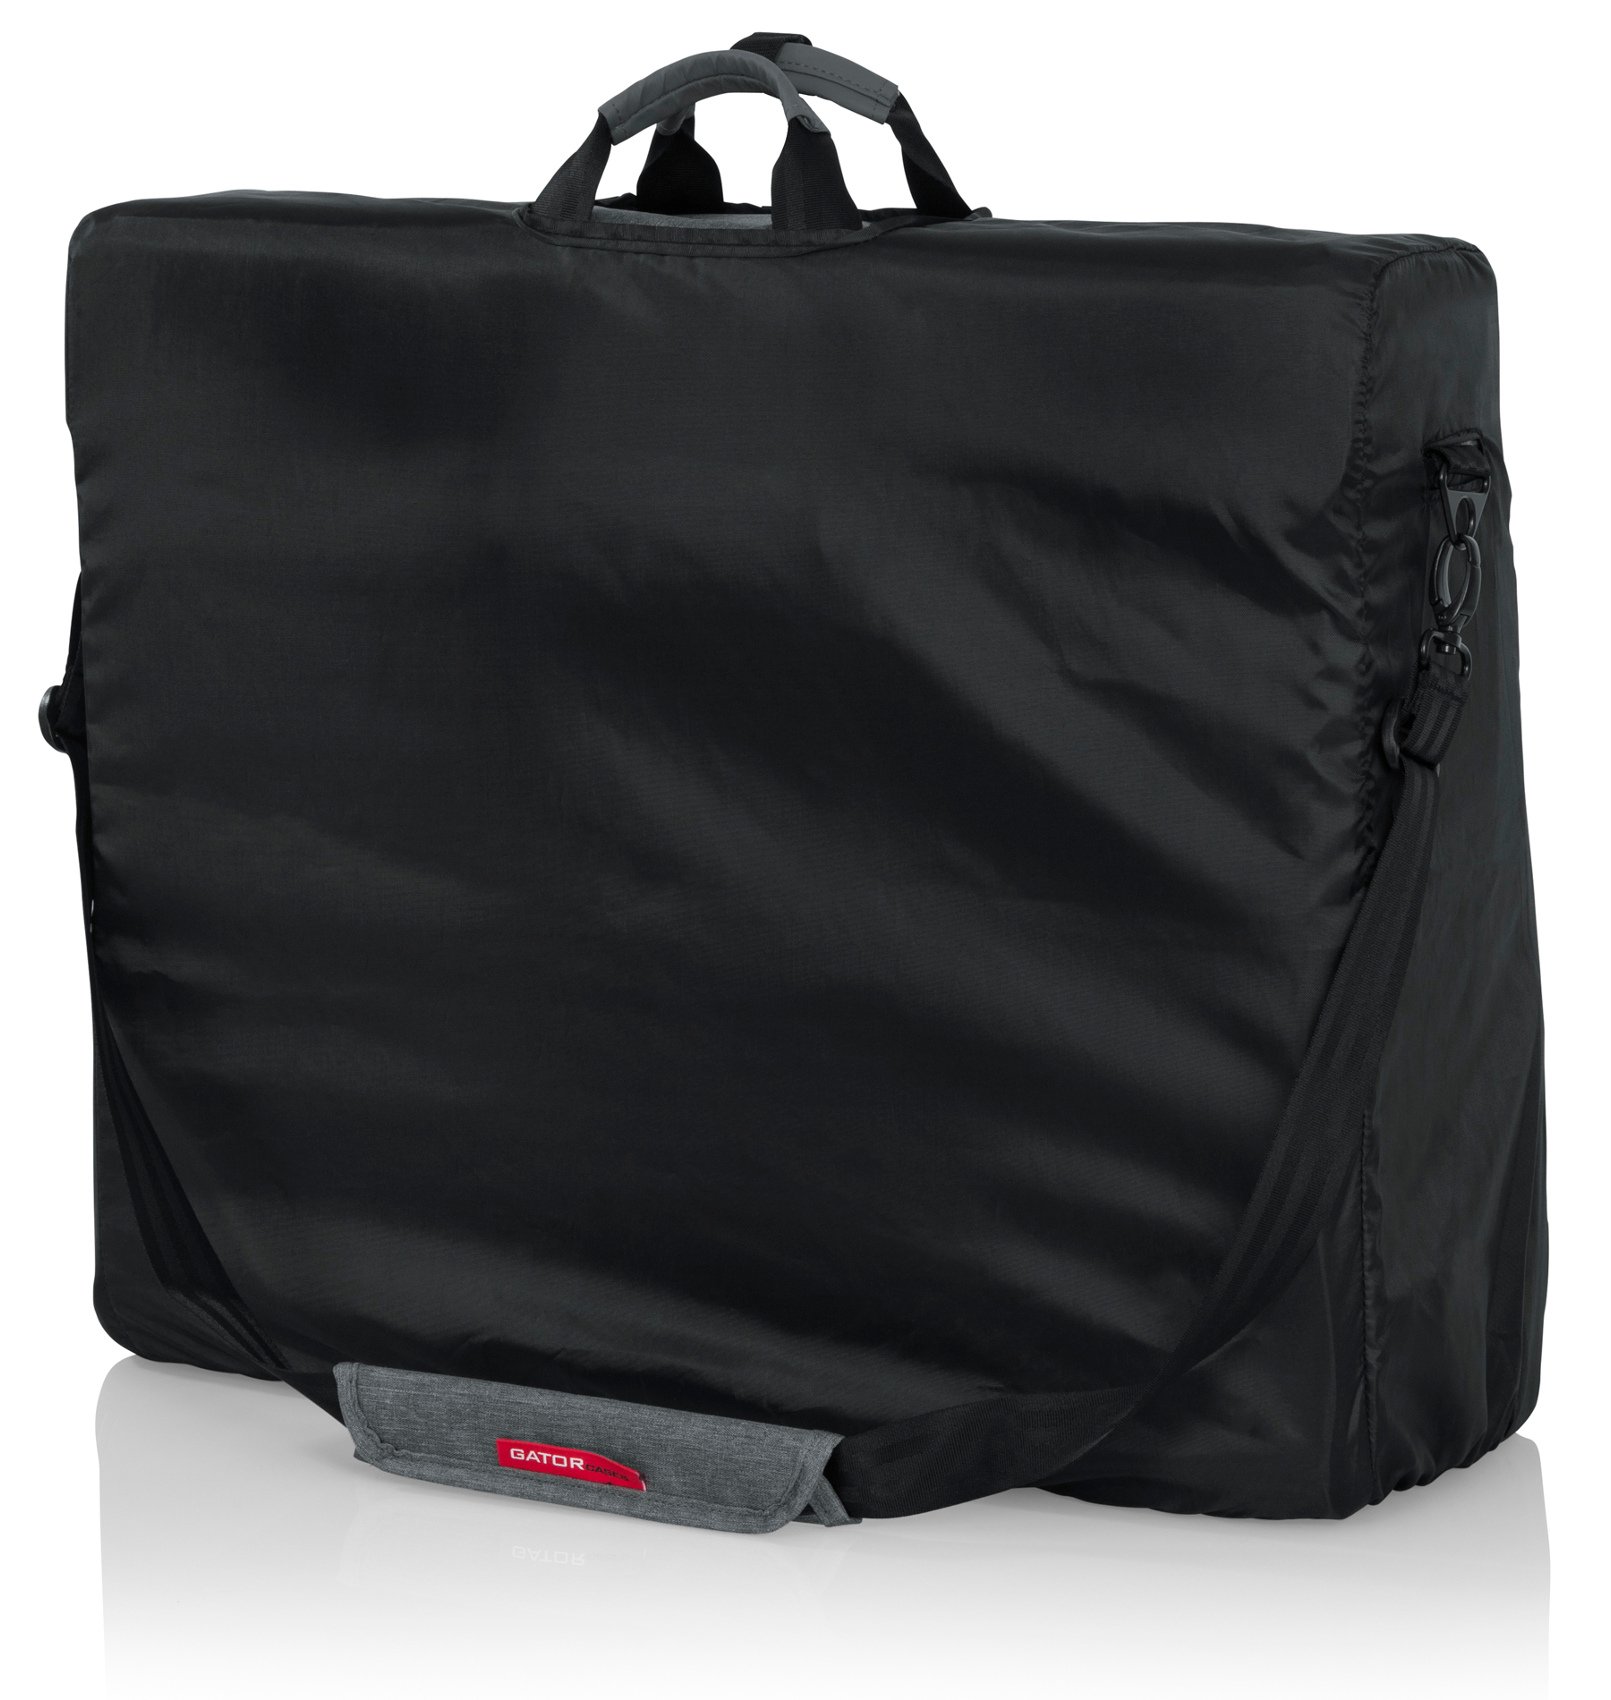 Gator Cases Creative Pro Series Nylon Carry Tote Bag for Apple 27 iMac Desktop Computer G-CPR-IM27 